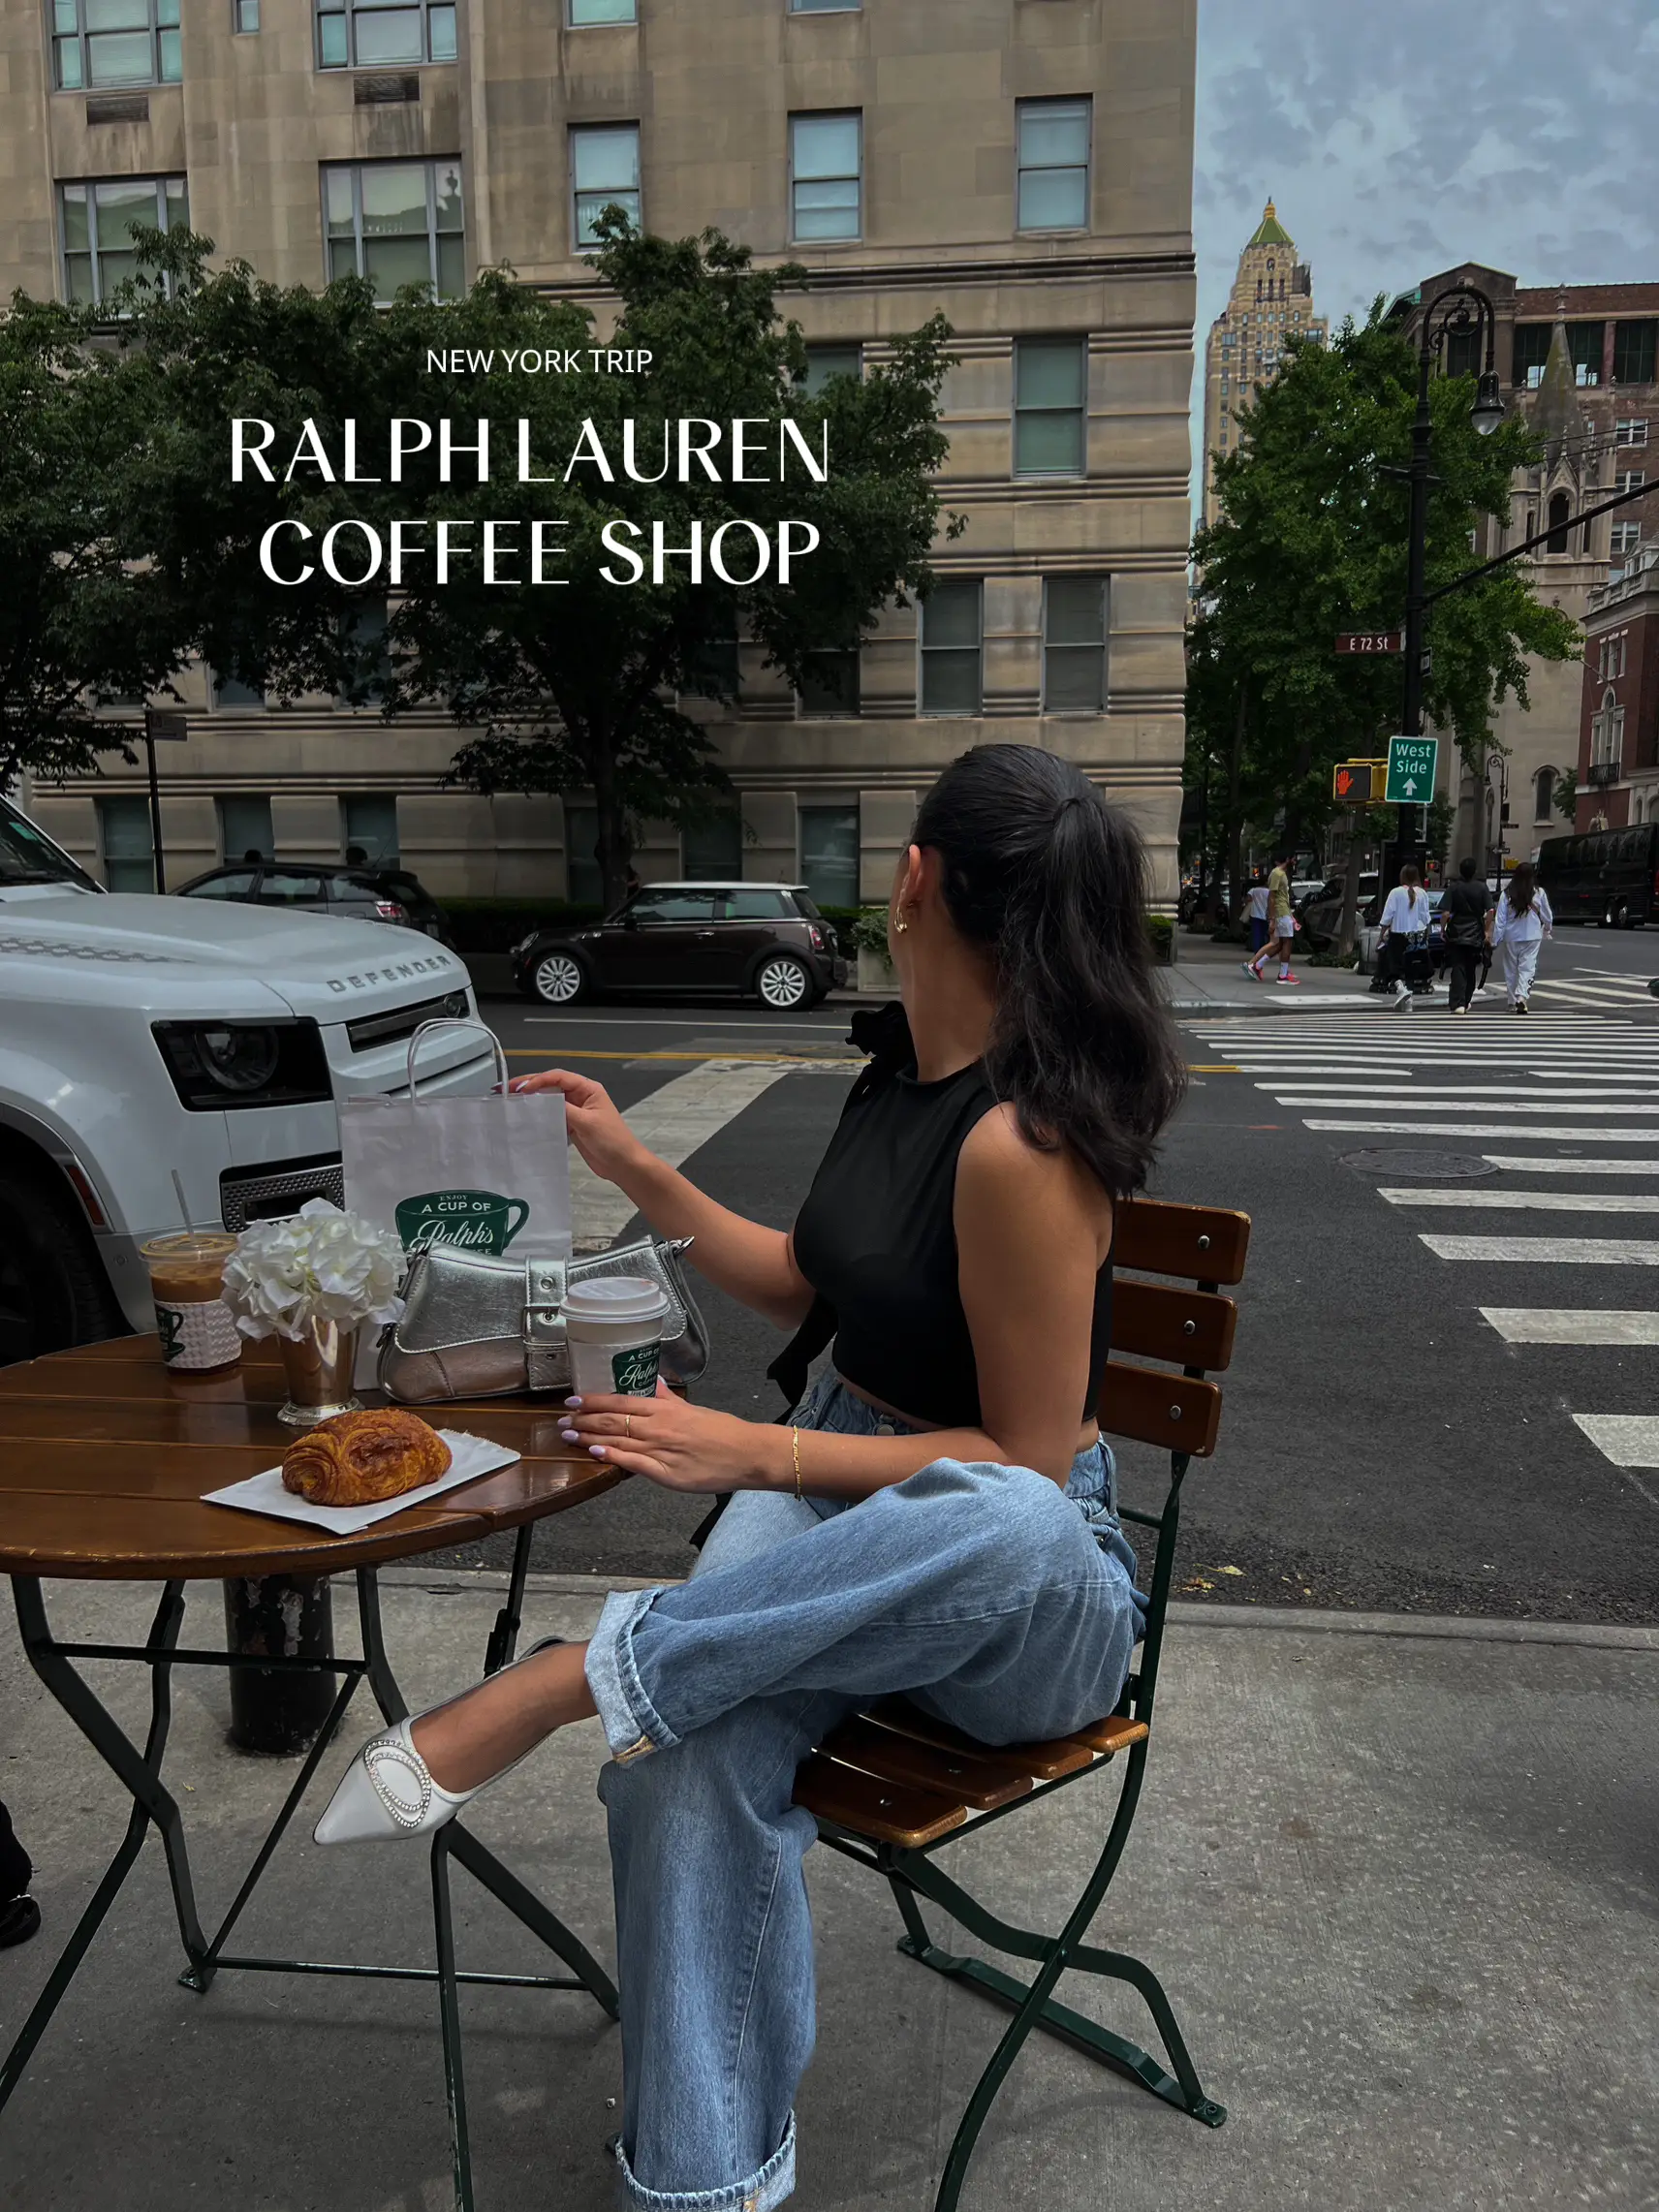 The Ralph Lauren Cafe's images